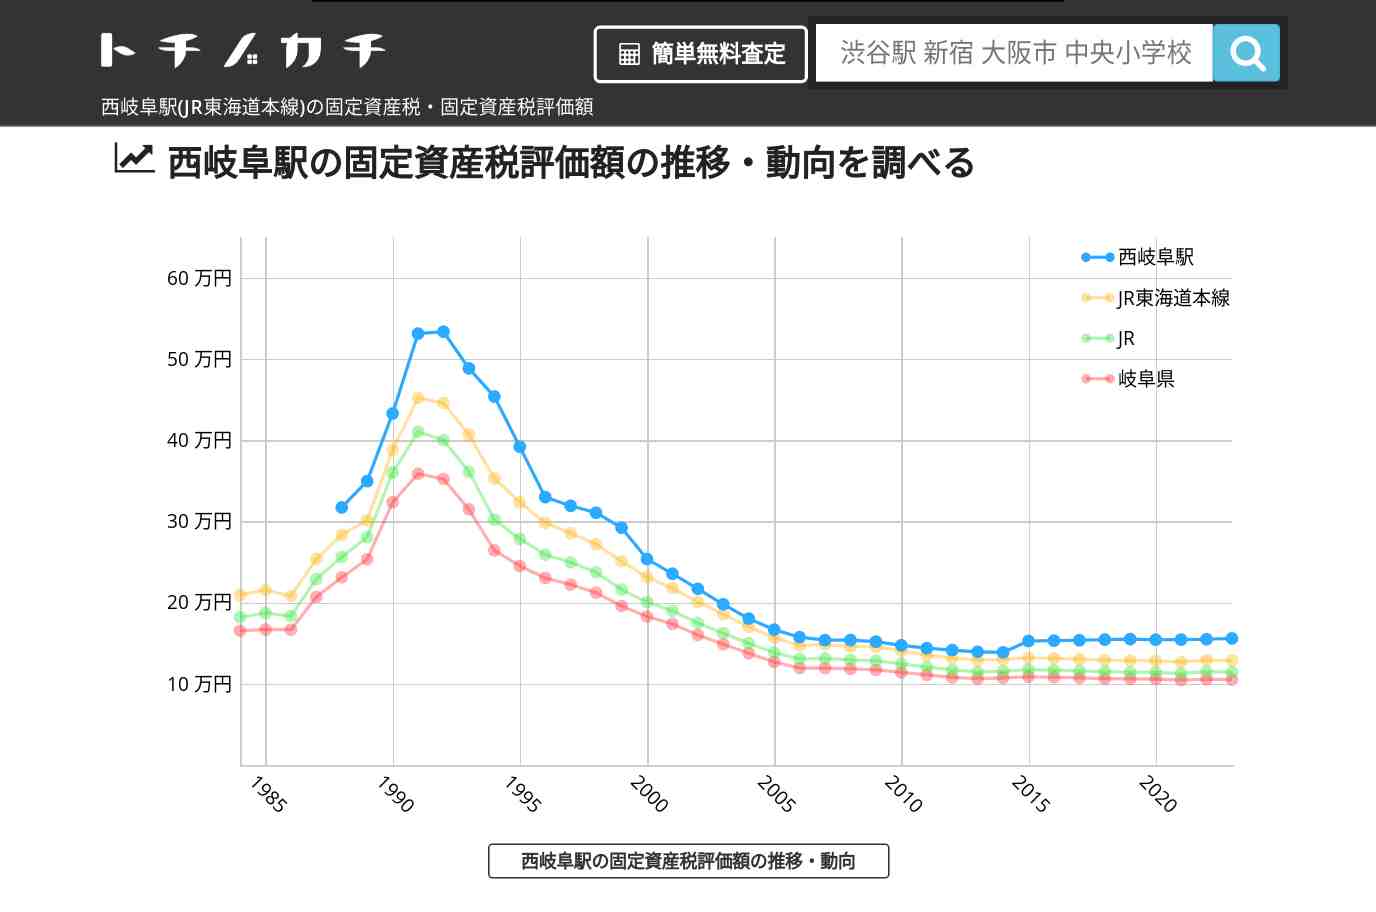 西岐阜駅(JR東海道本線)の固定資産税・固定資産税評価額 | トチノカチ